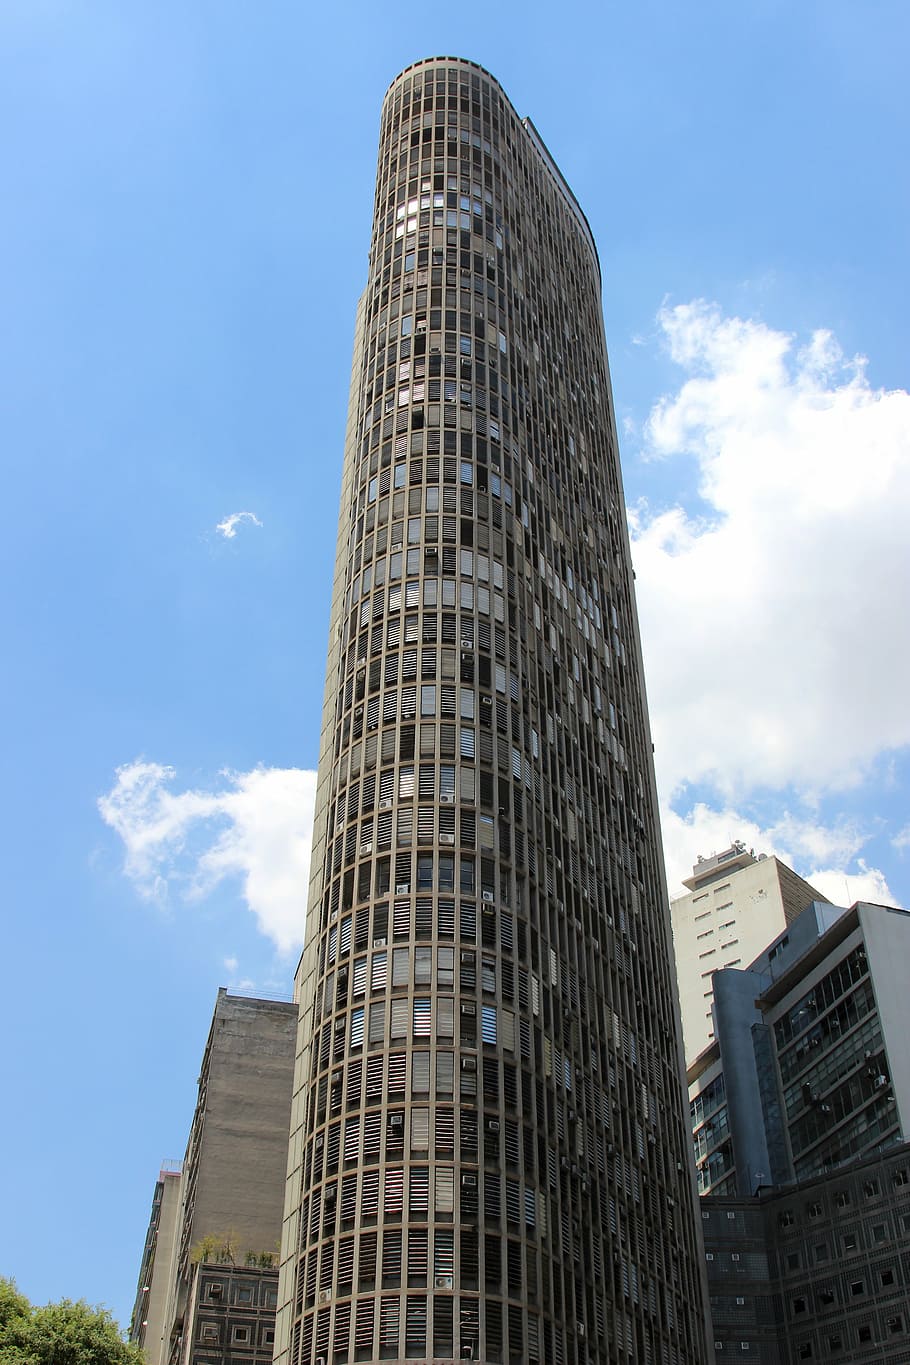 italy building, architecture, vertical, blue sky, tall building, building, highest sao paulo, brazil, vista, downtown são paulo